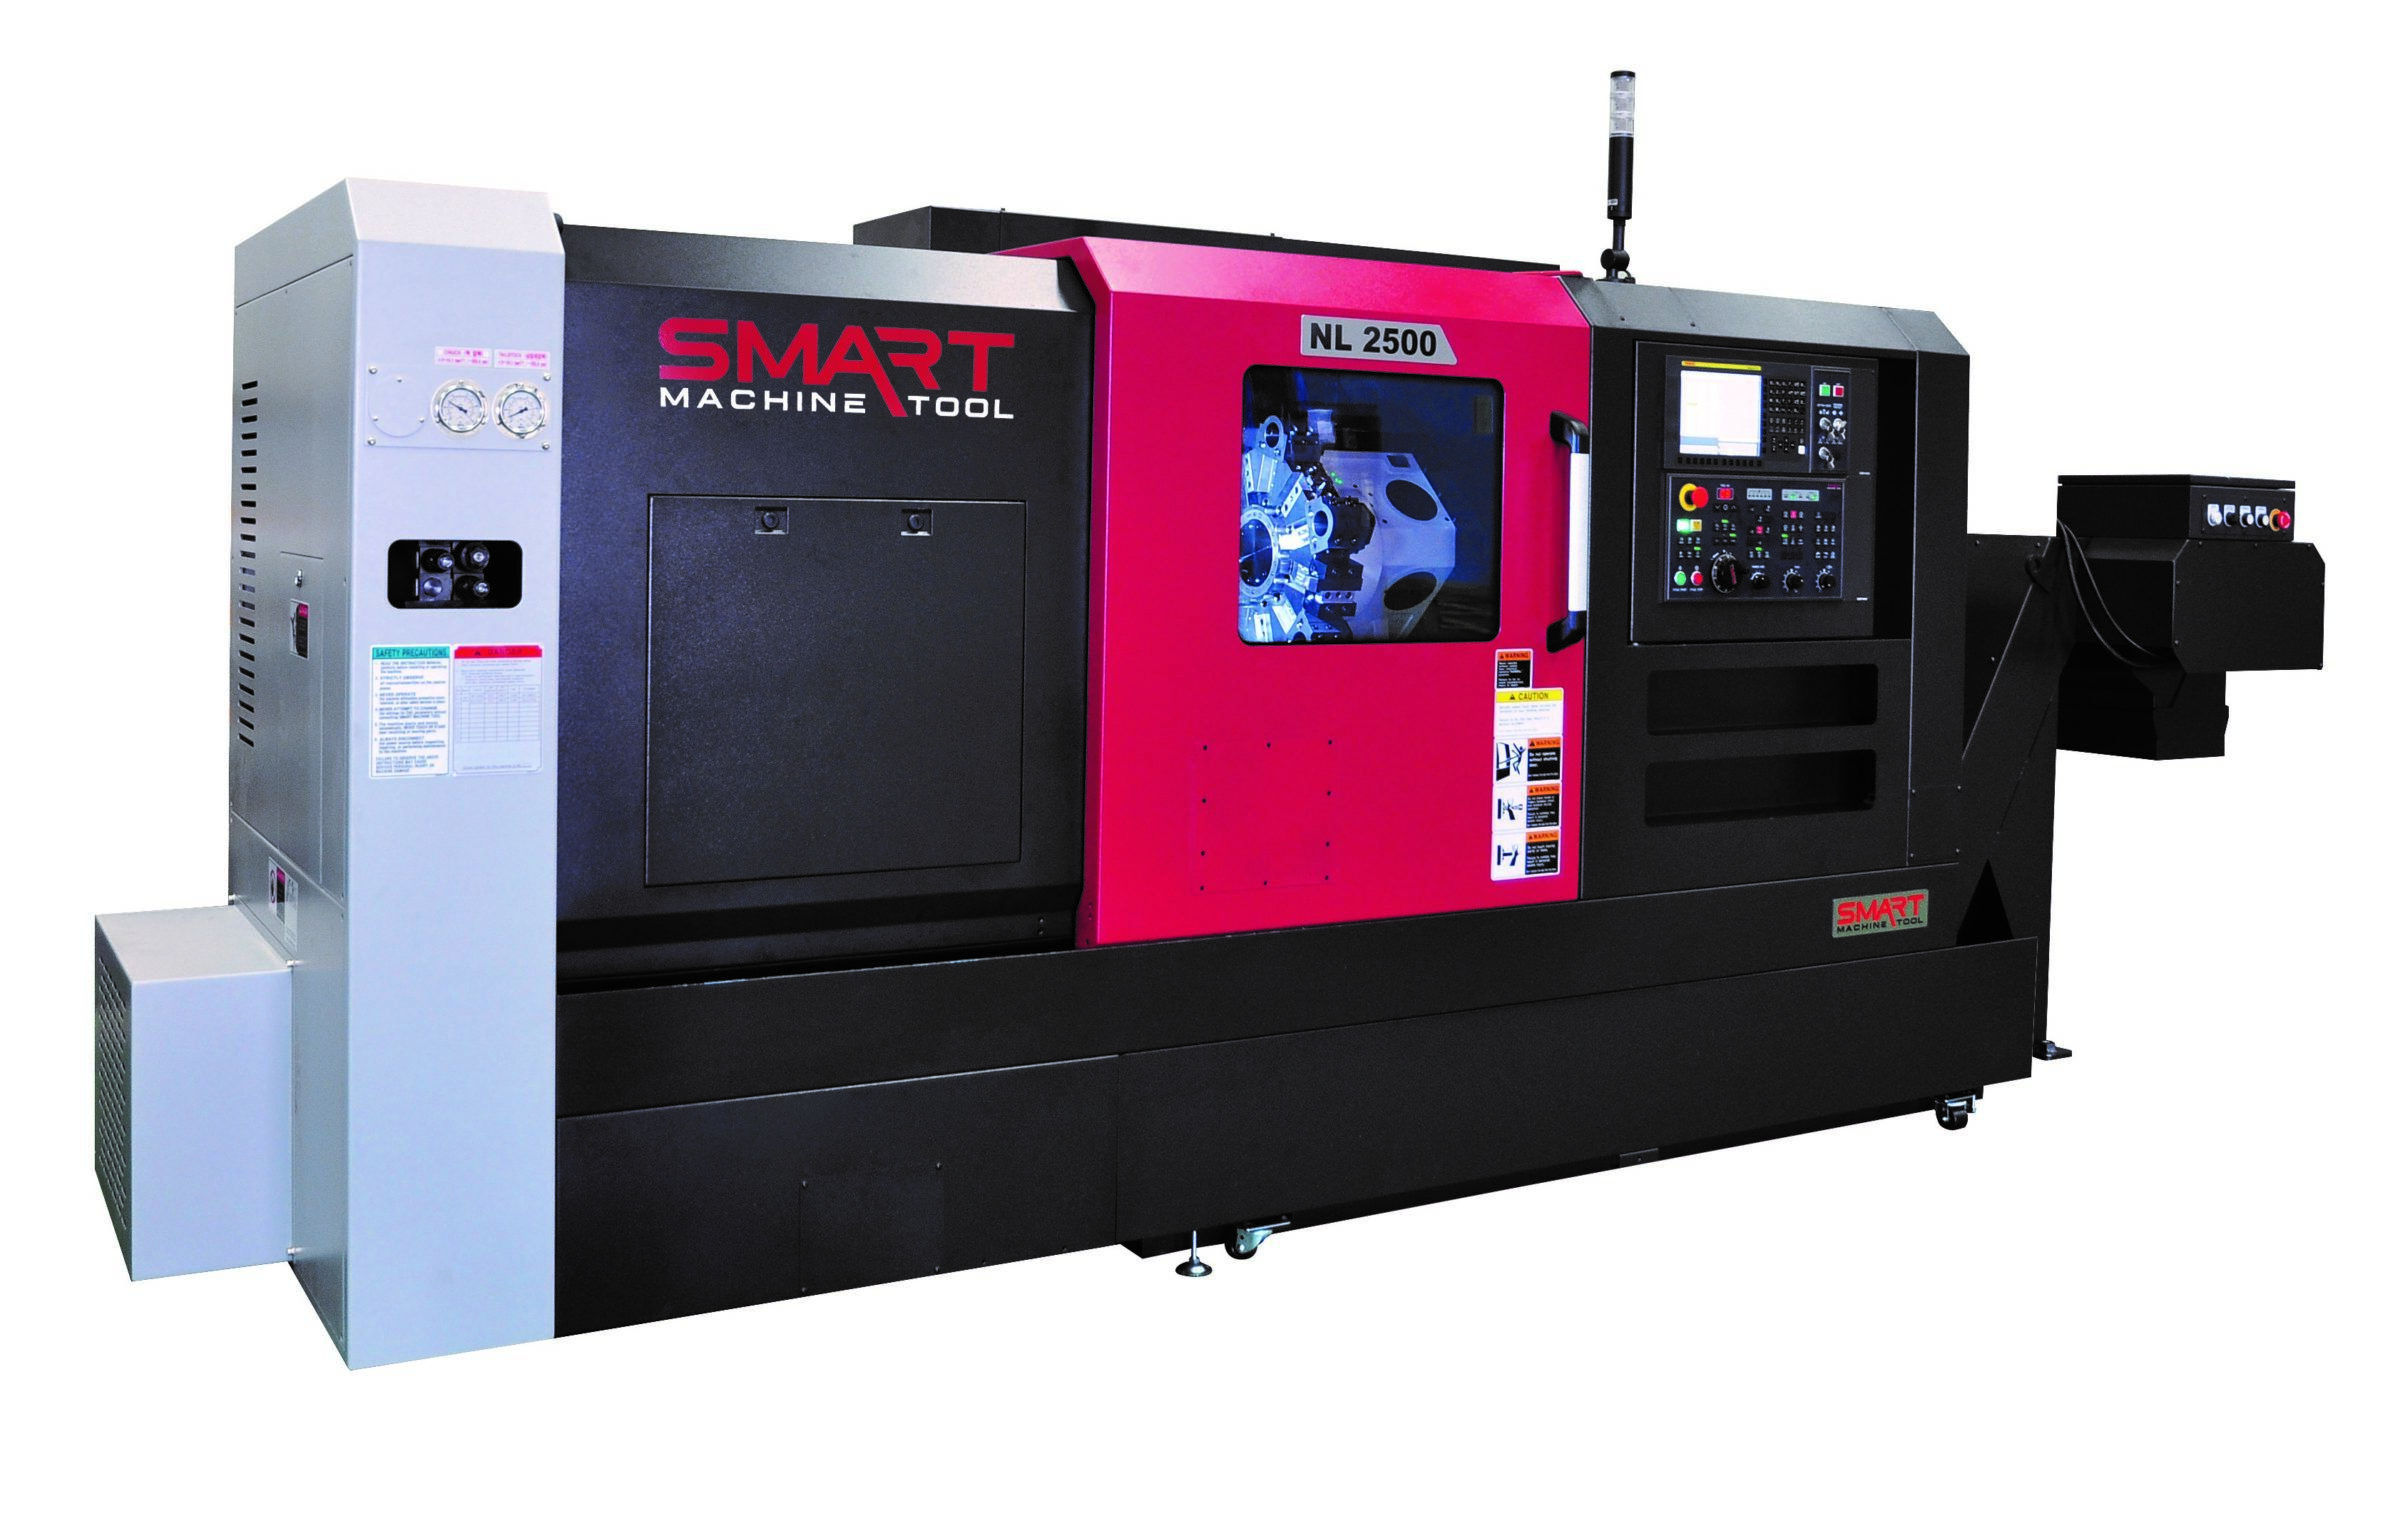 Smart Machine Tool NL 2500M